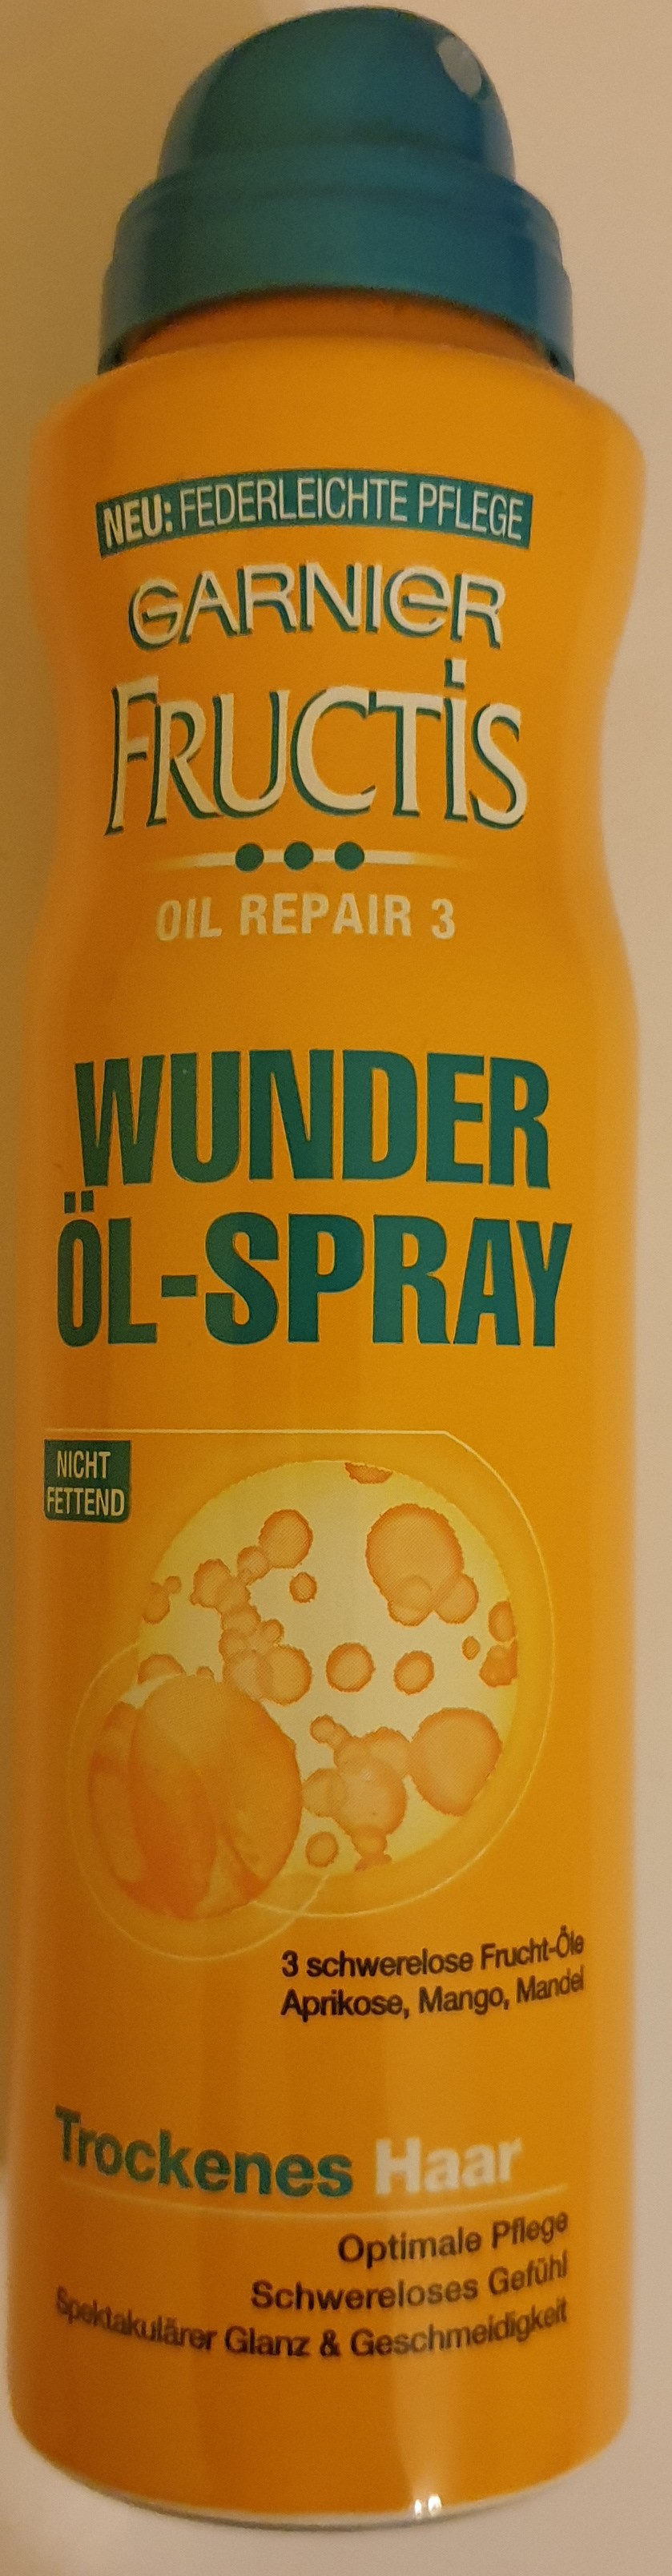 Fructis Wunder Öl-Spray - Product - de